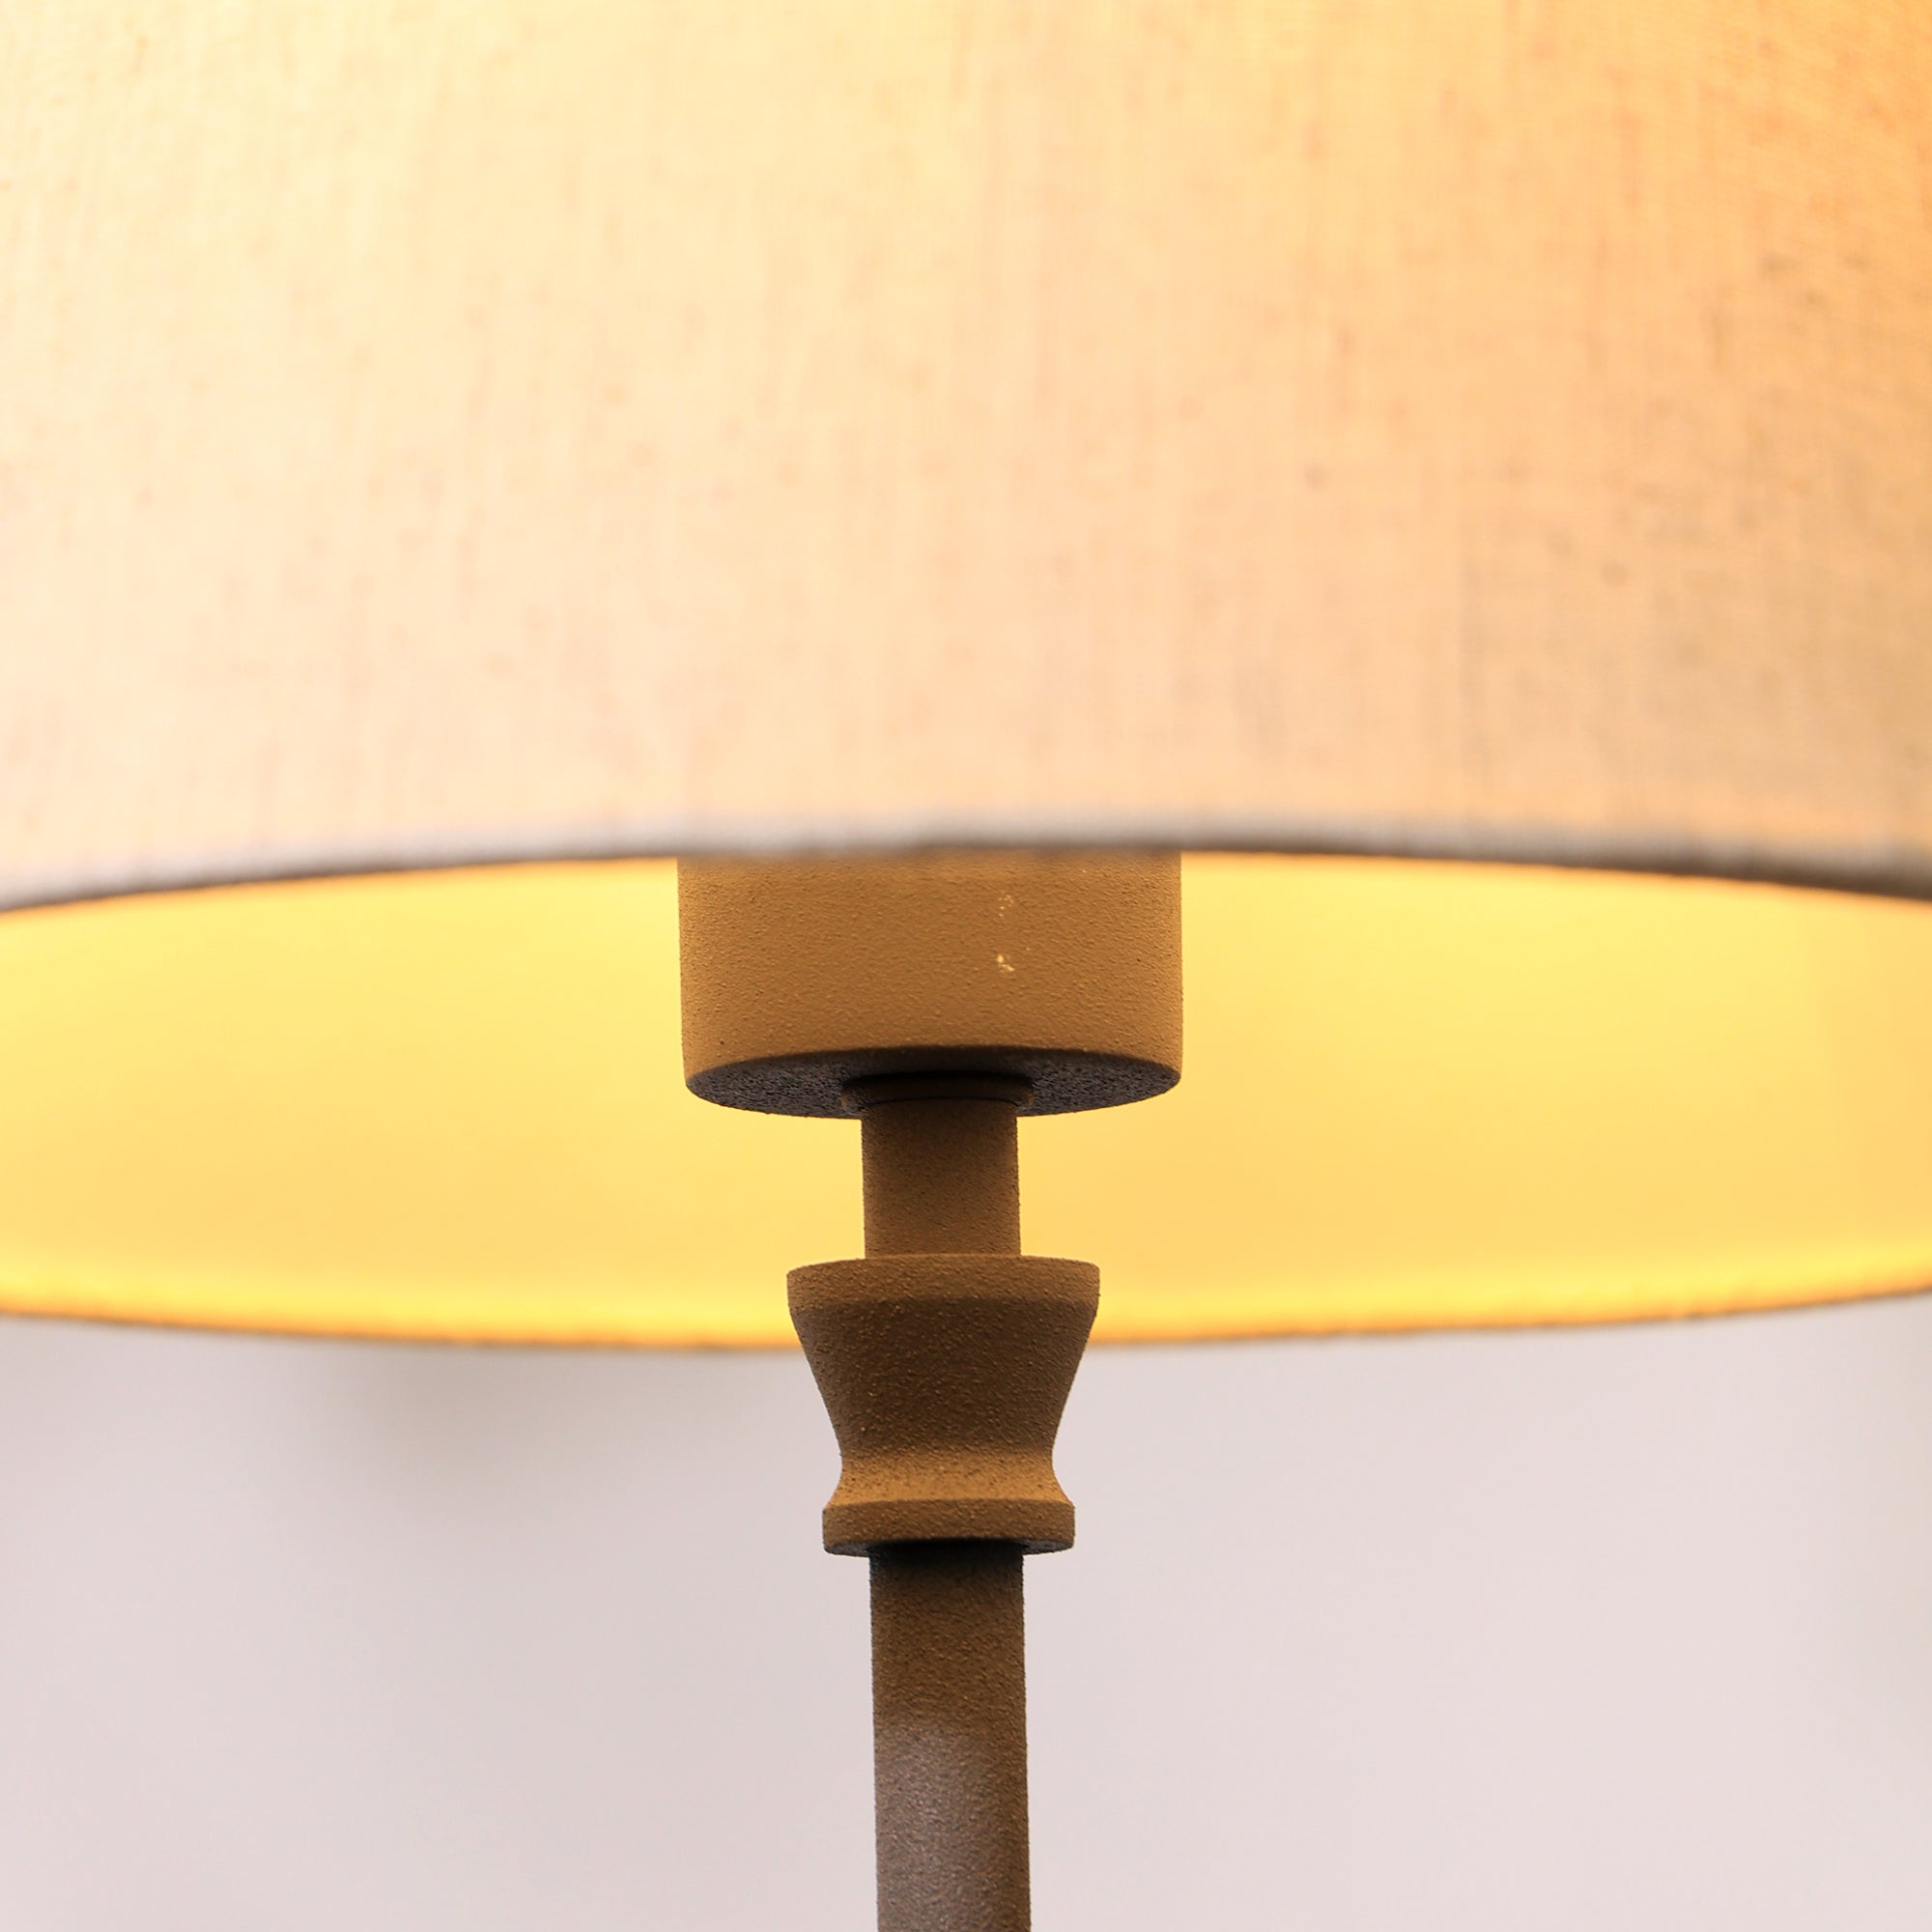 RUSTIQUE TABLE LAMP - COTTAGE CHARM, MID-CENTURY, LINEN SHADE DESK LAMP